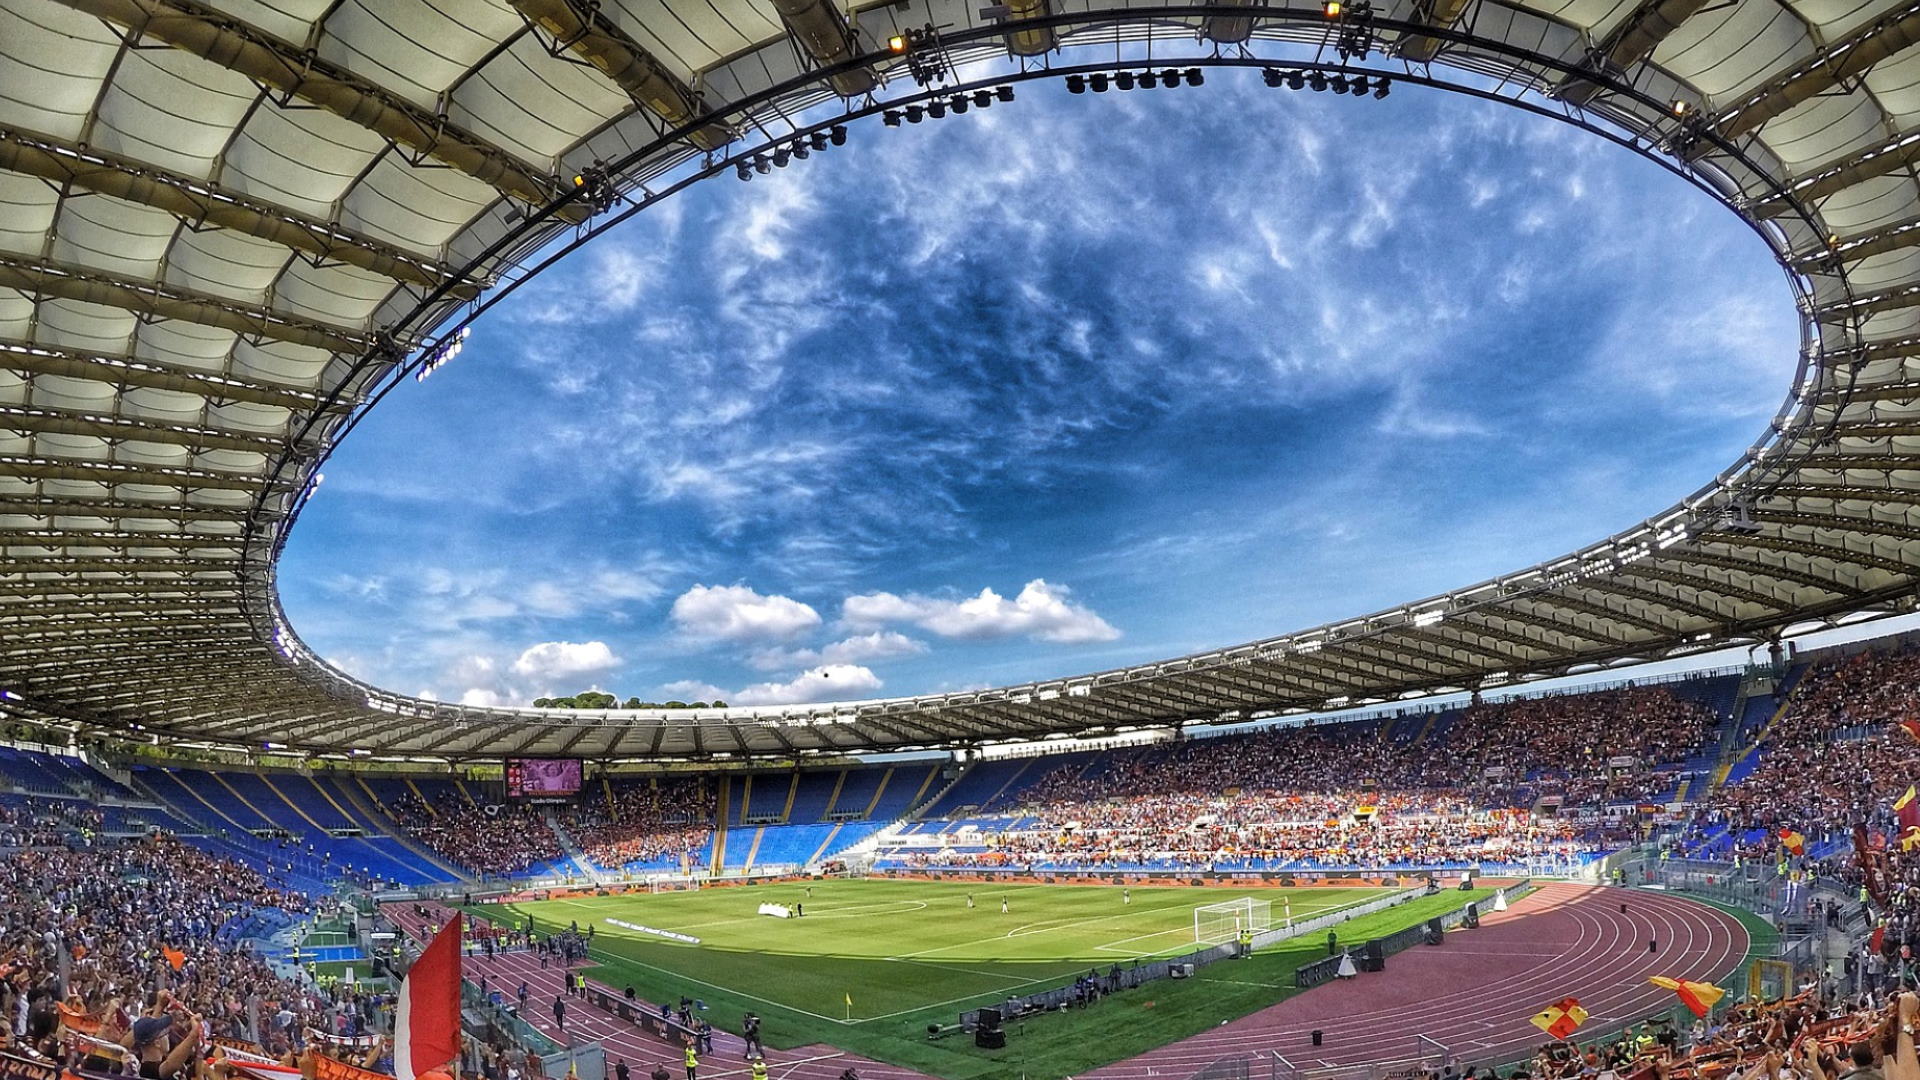 Stadio Olimpico romeins sporticoon